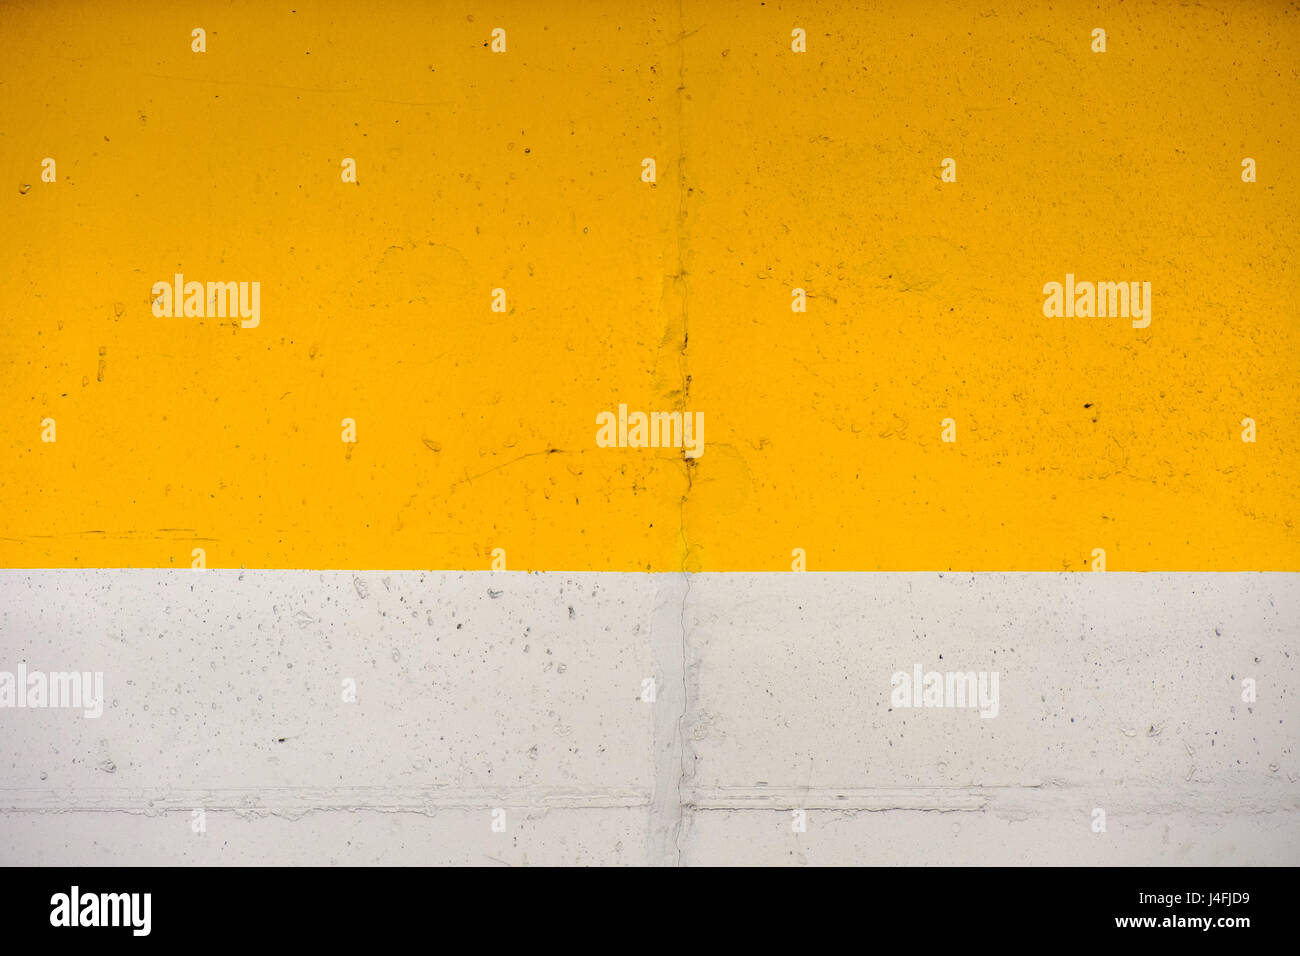 Cruz horizontal asimétrica fotografías e imágenes de alta resolución - Alamy